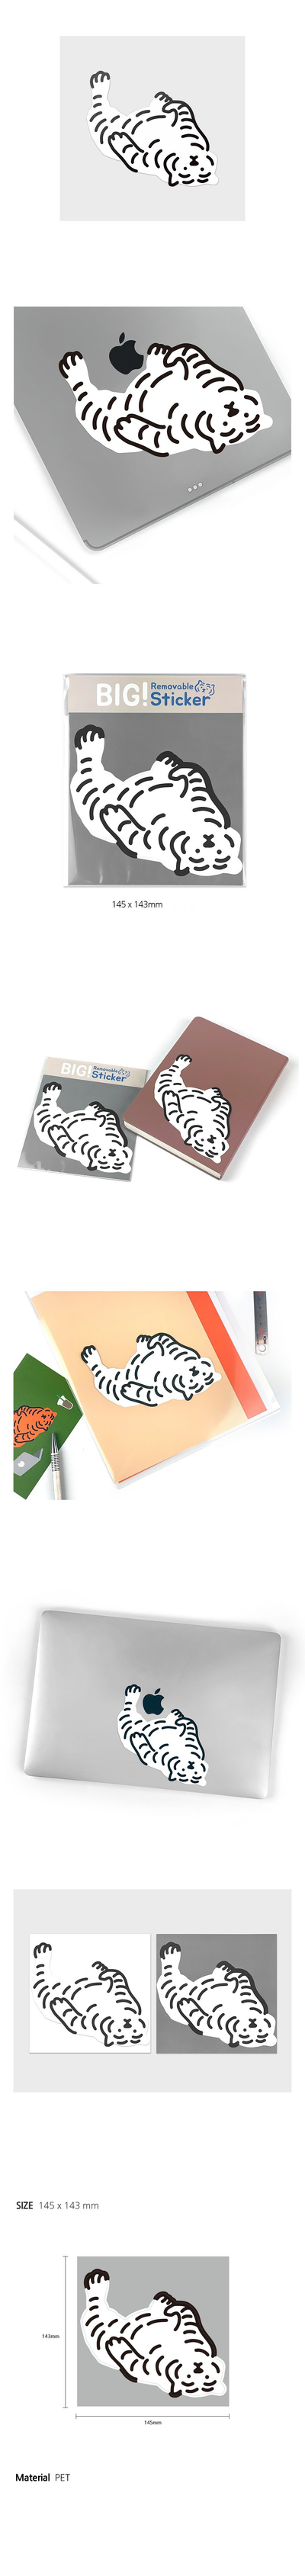 More Tiger Big Removable Sticker